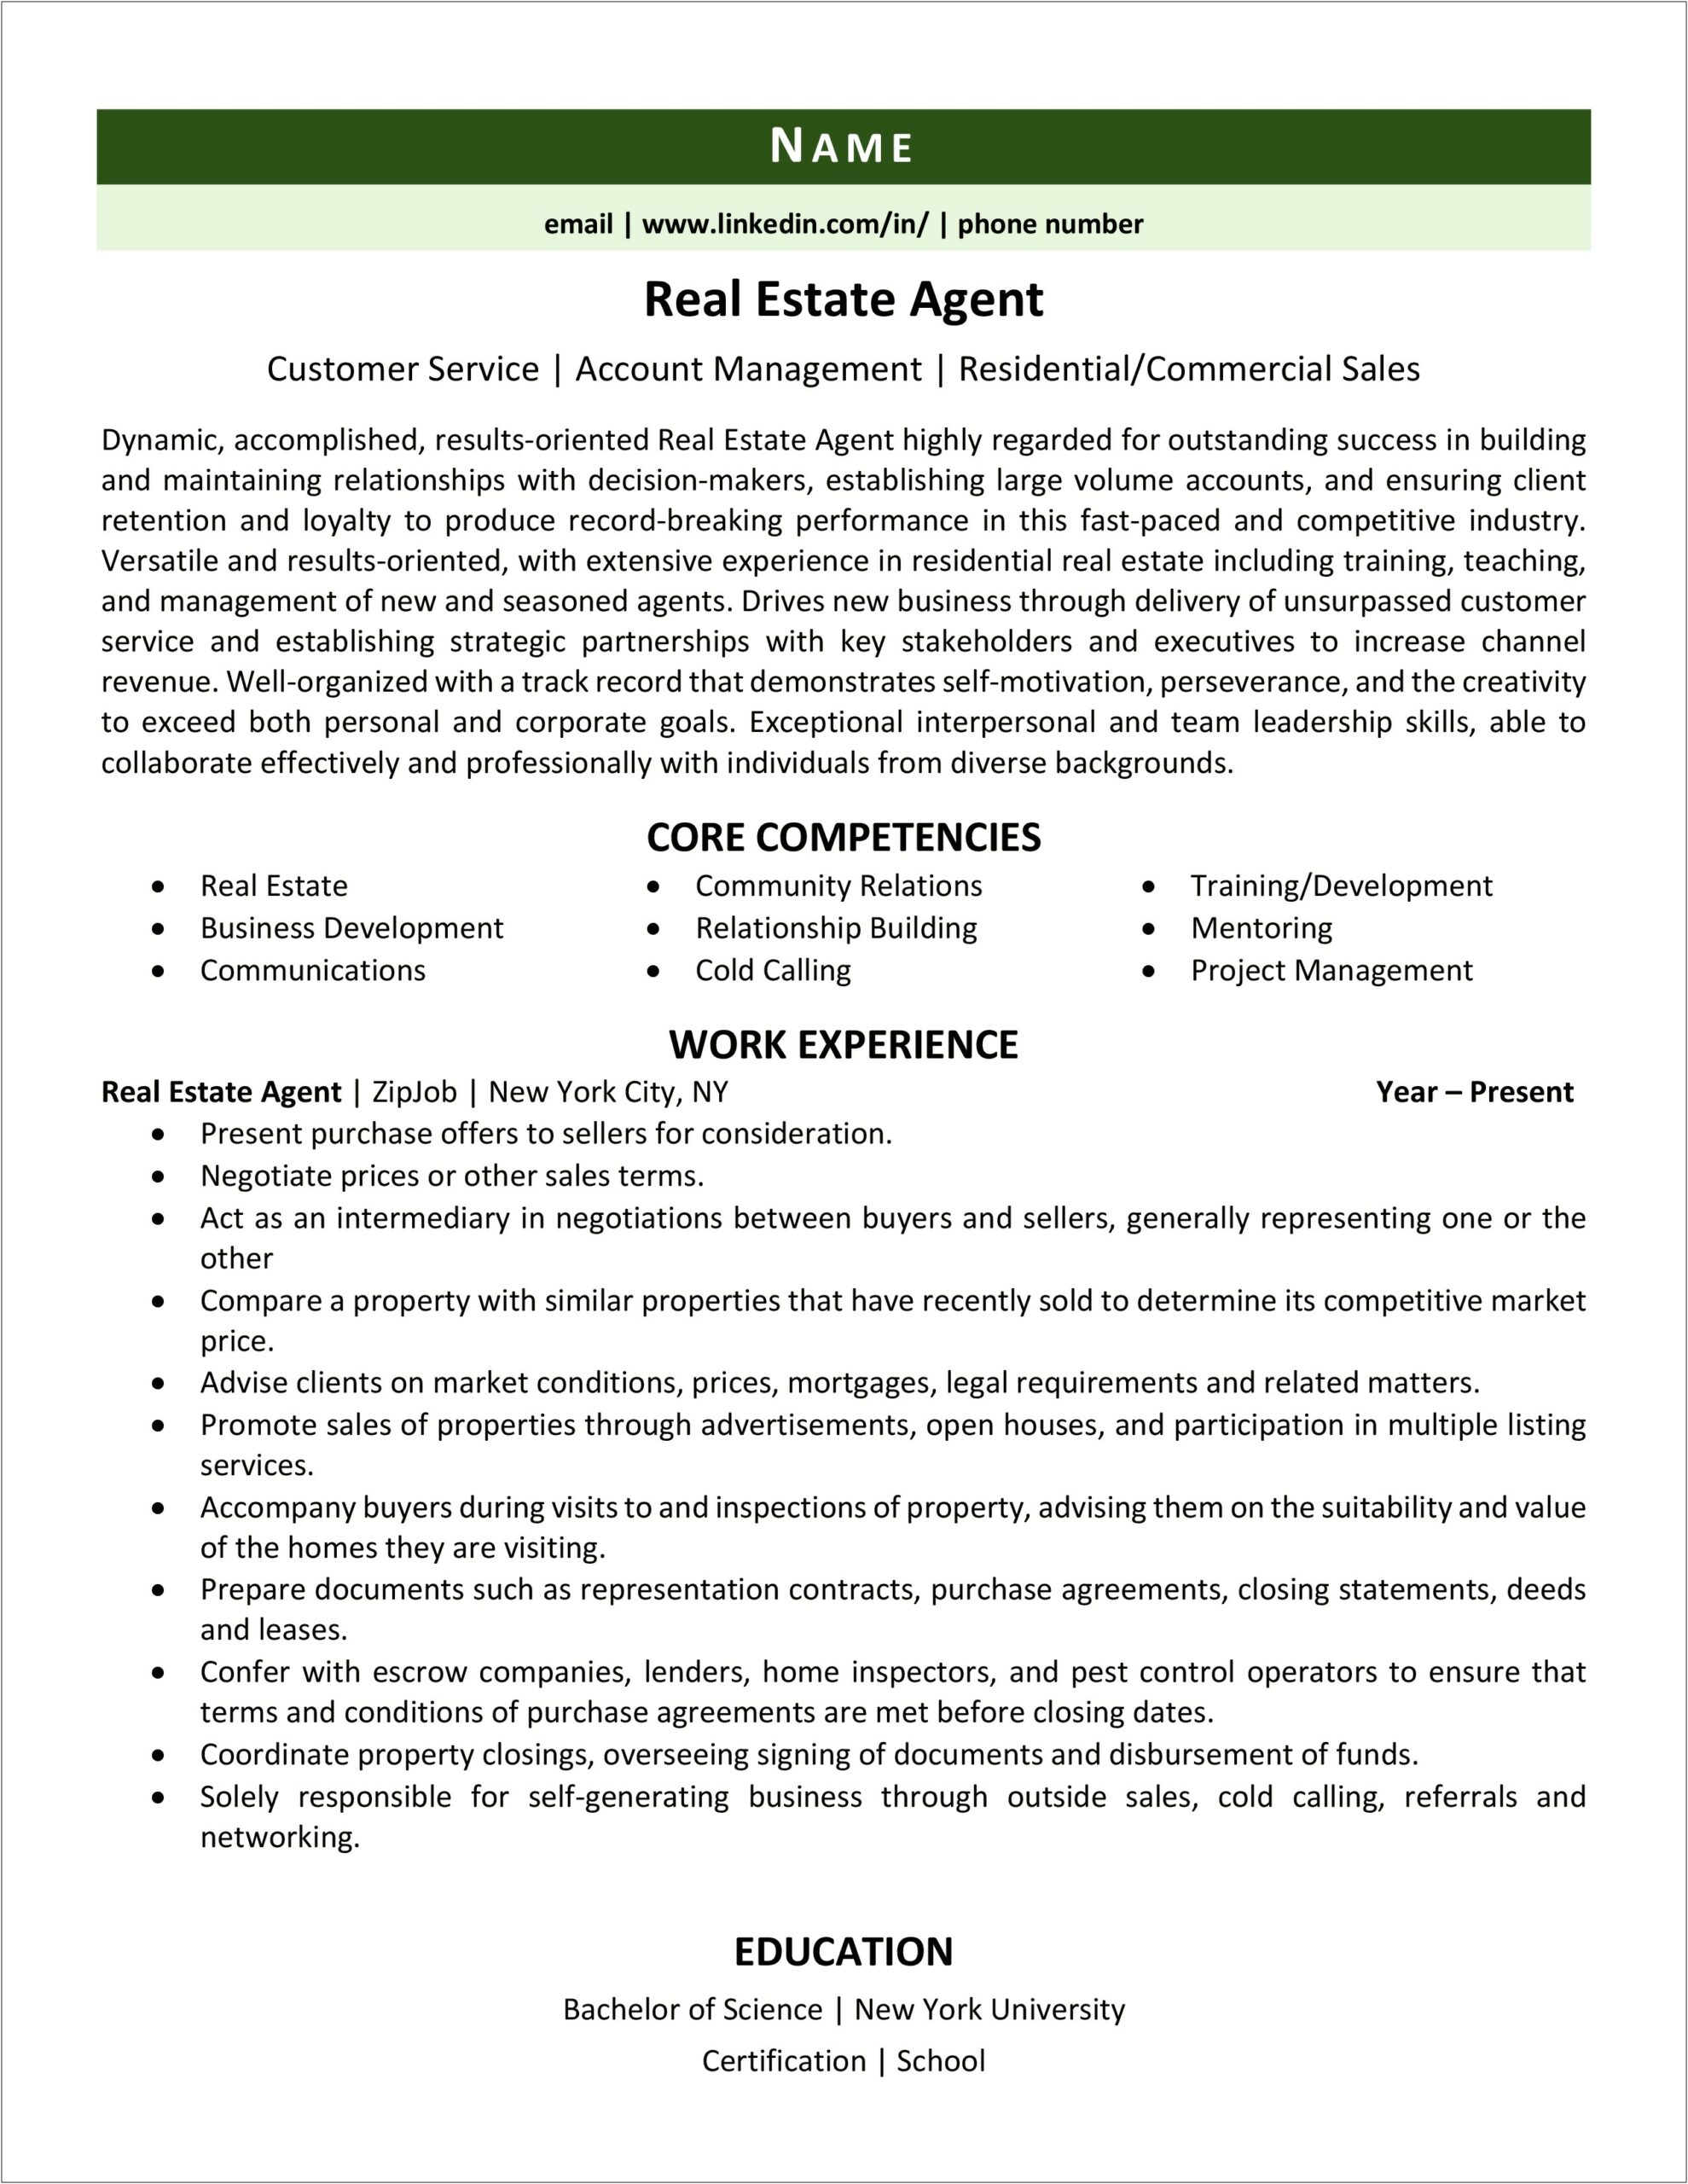 Sample Letter Of Real Estate Agents Resume